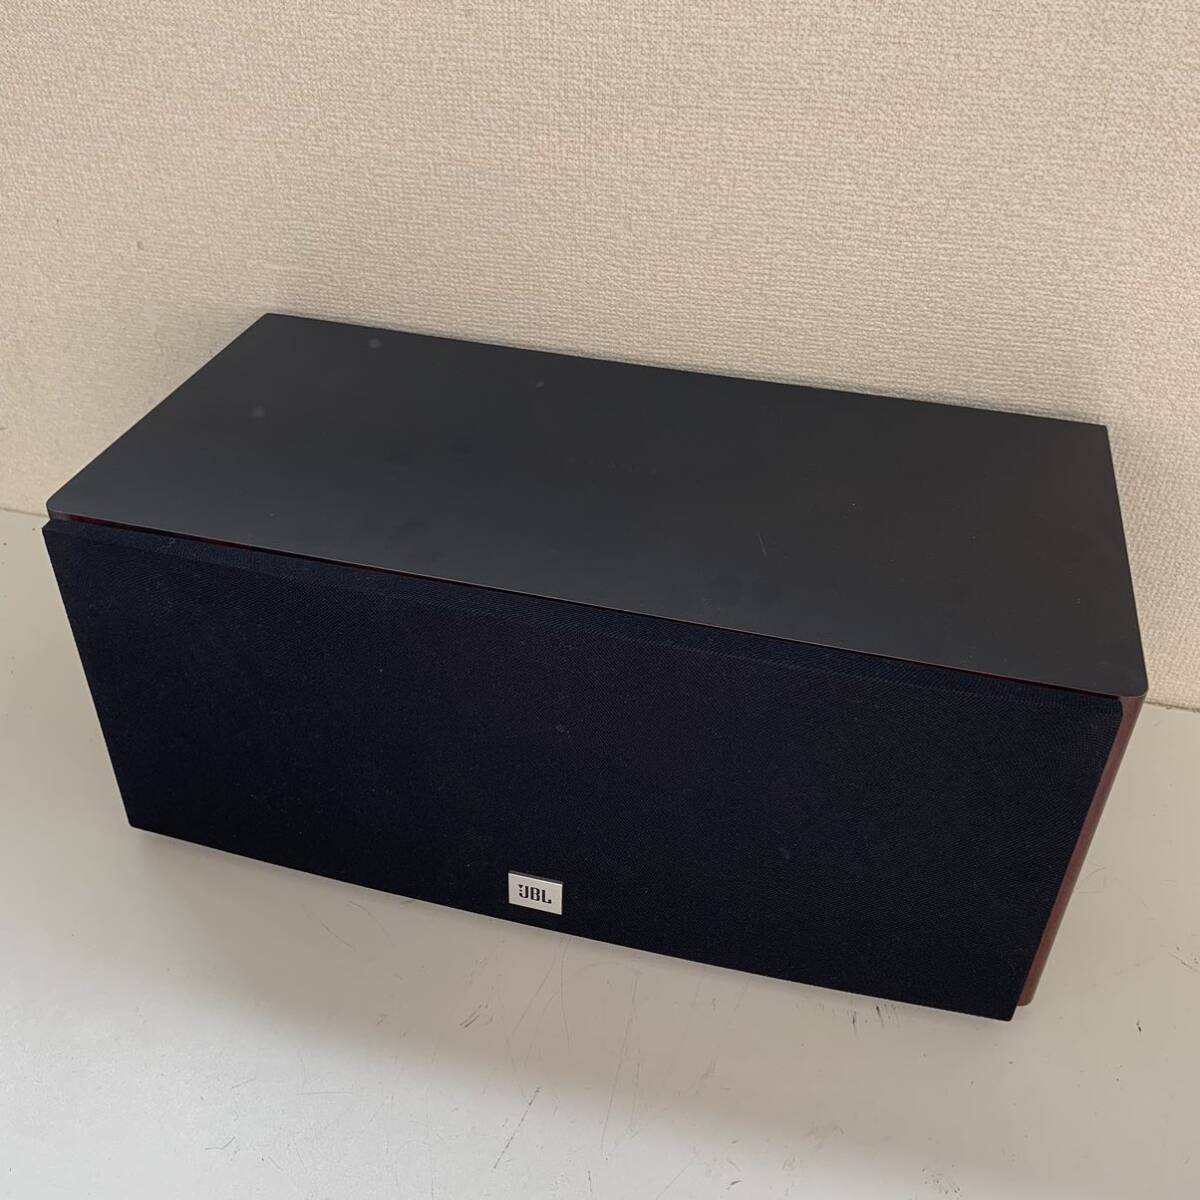 [Hd1] JBL A125C speaker operation goods center speaker 2way audio 1877-30